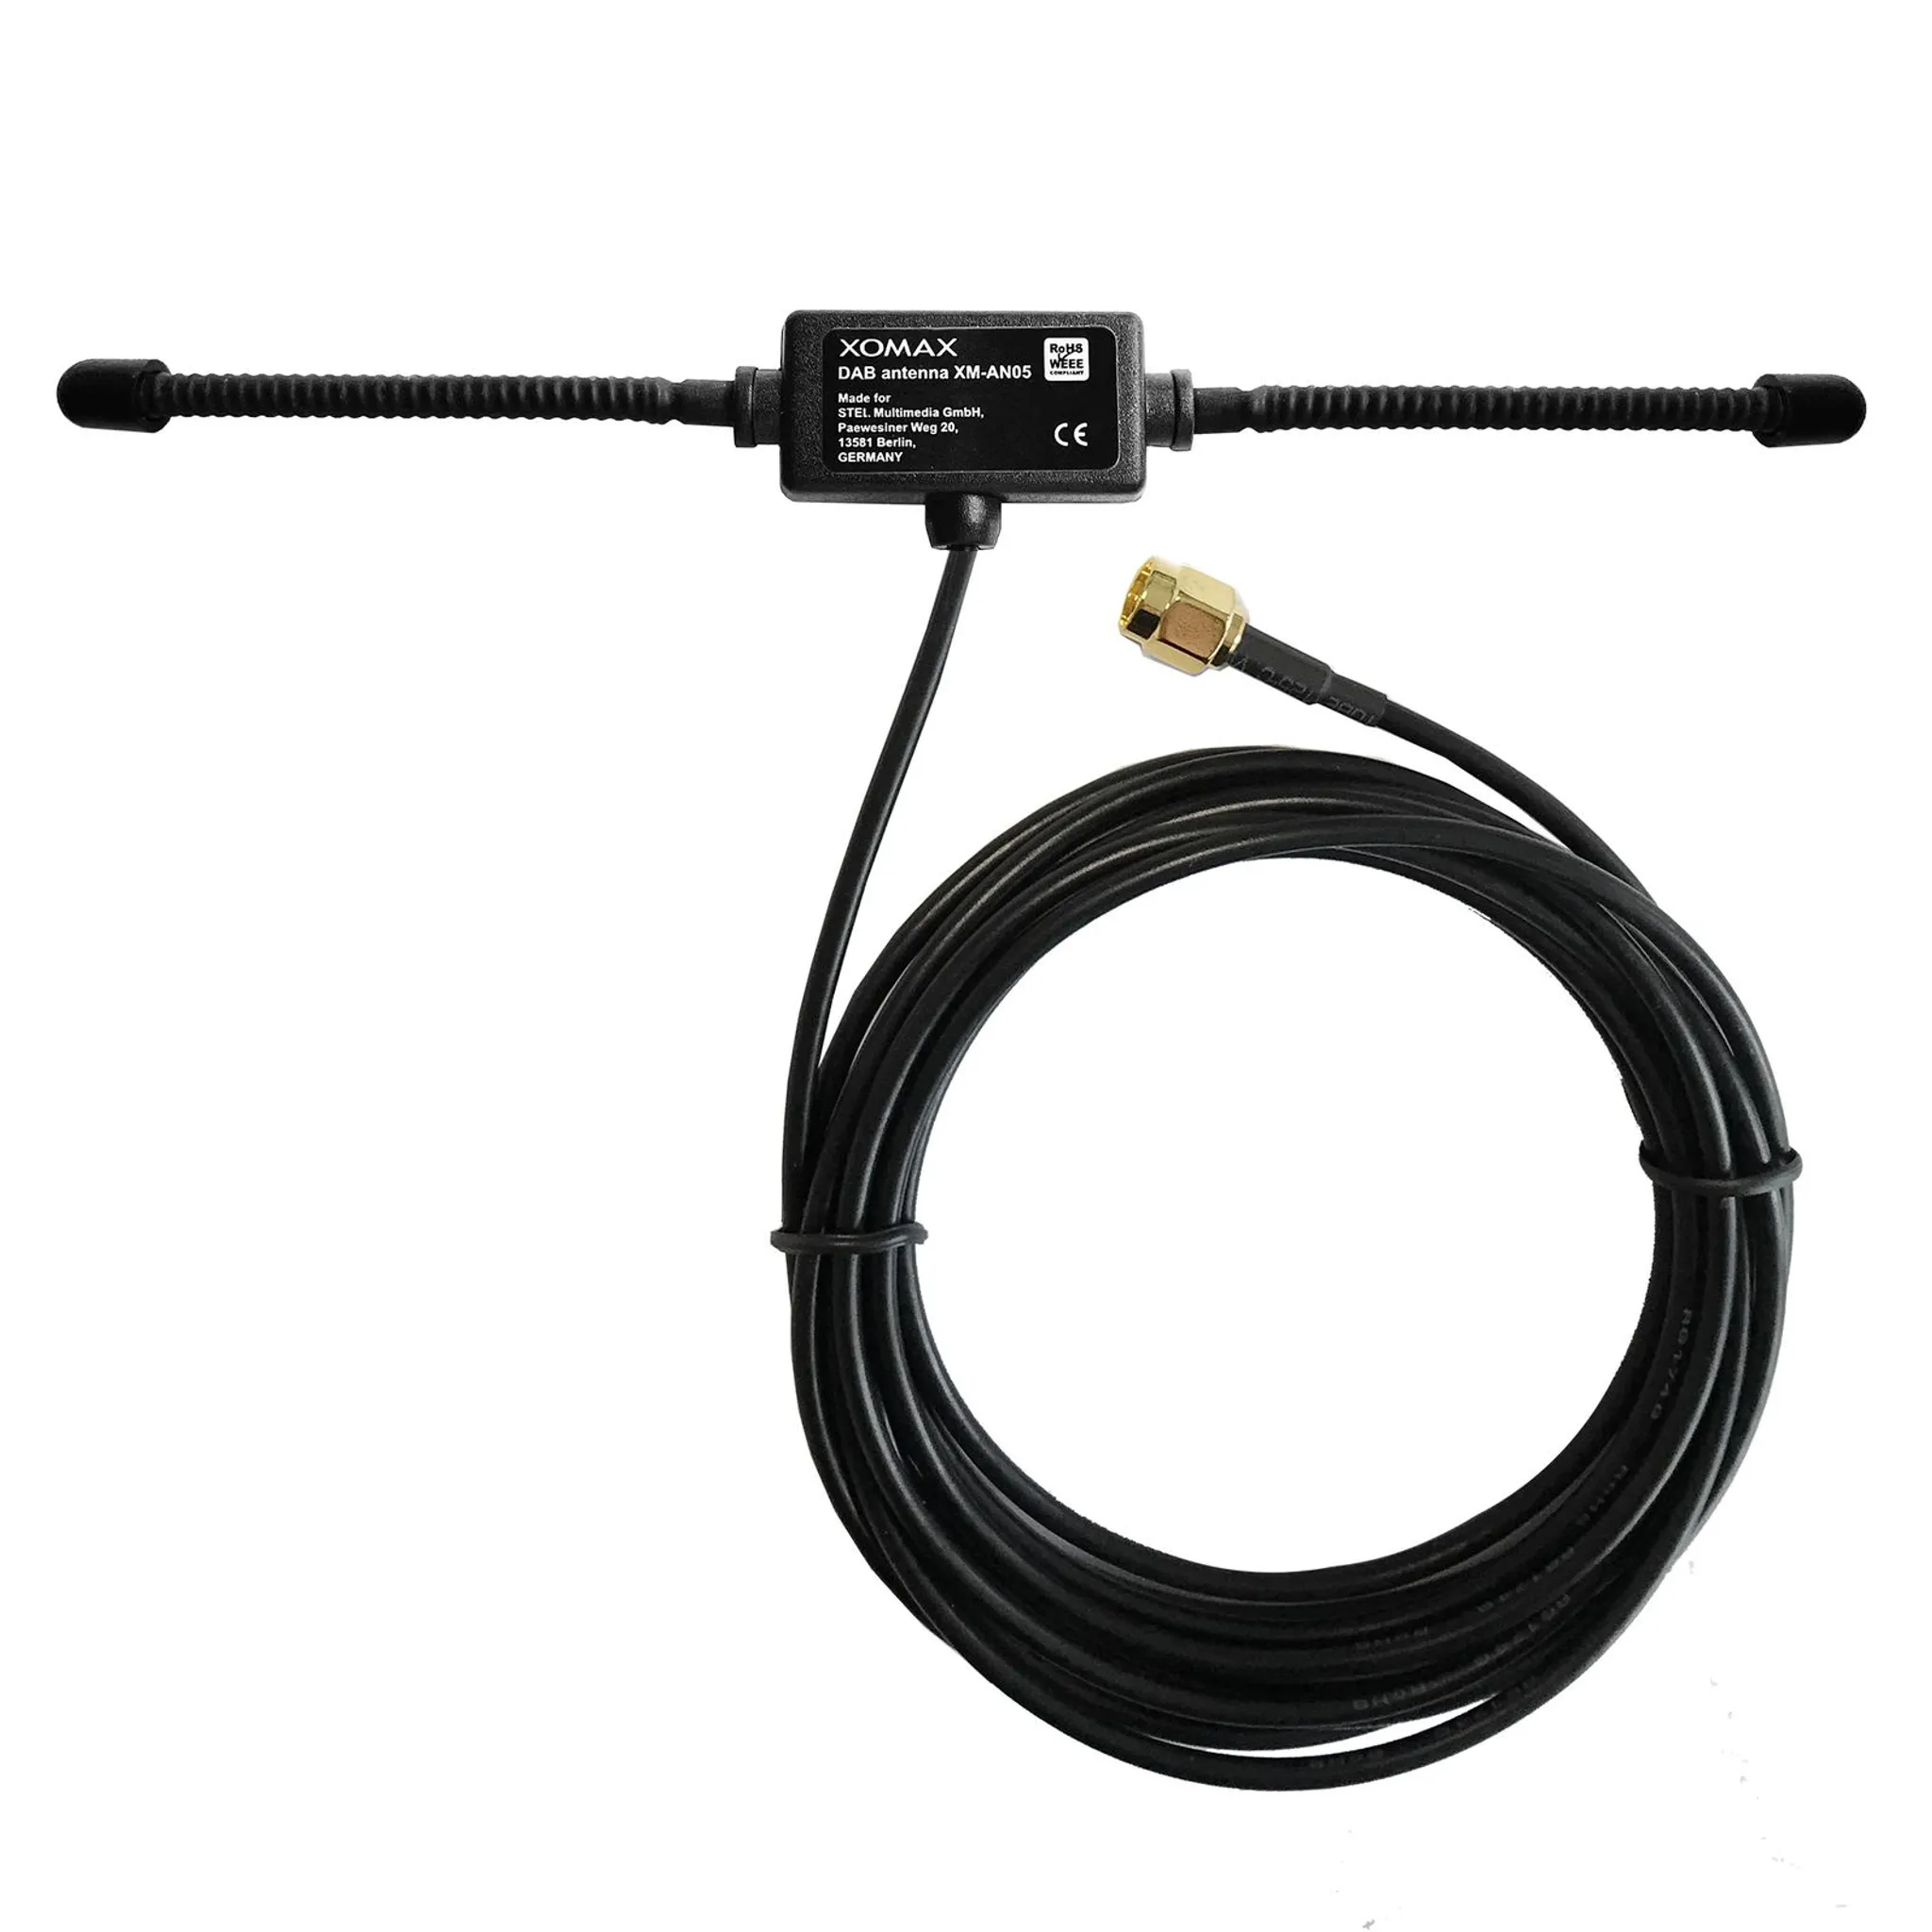  12V Antenne aktiv UKW/DAB+ mit 2 Kabeln 5m +(DIN/ISO Stecker/FAKRA/SMB  Buchse)